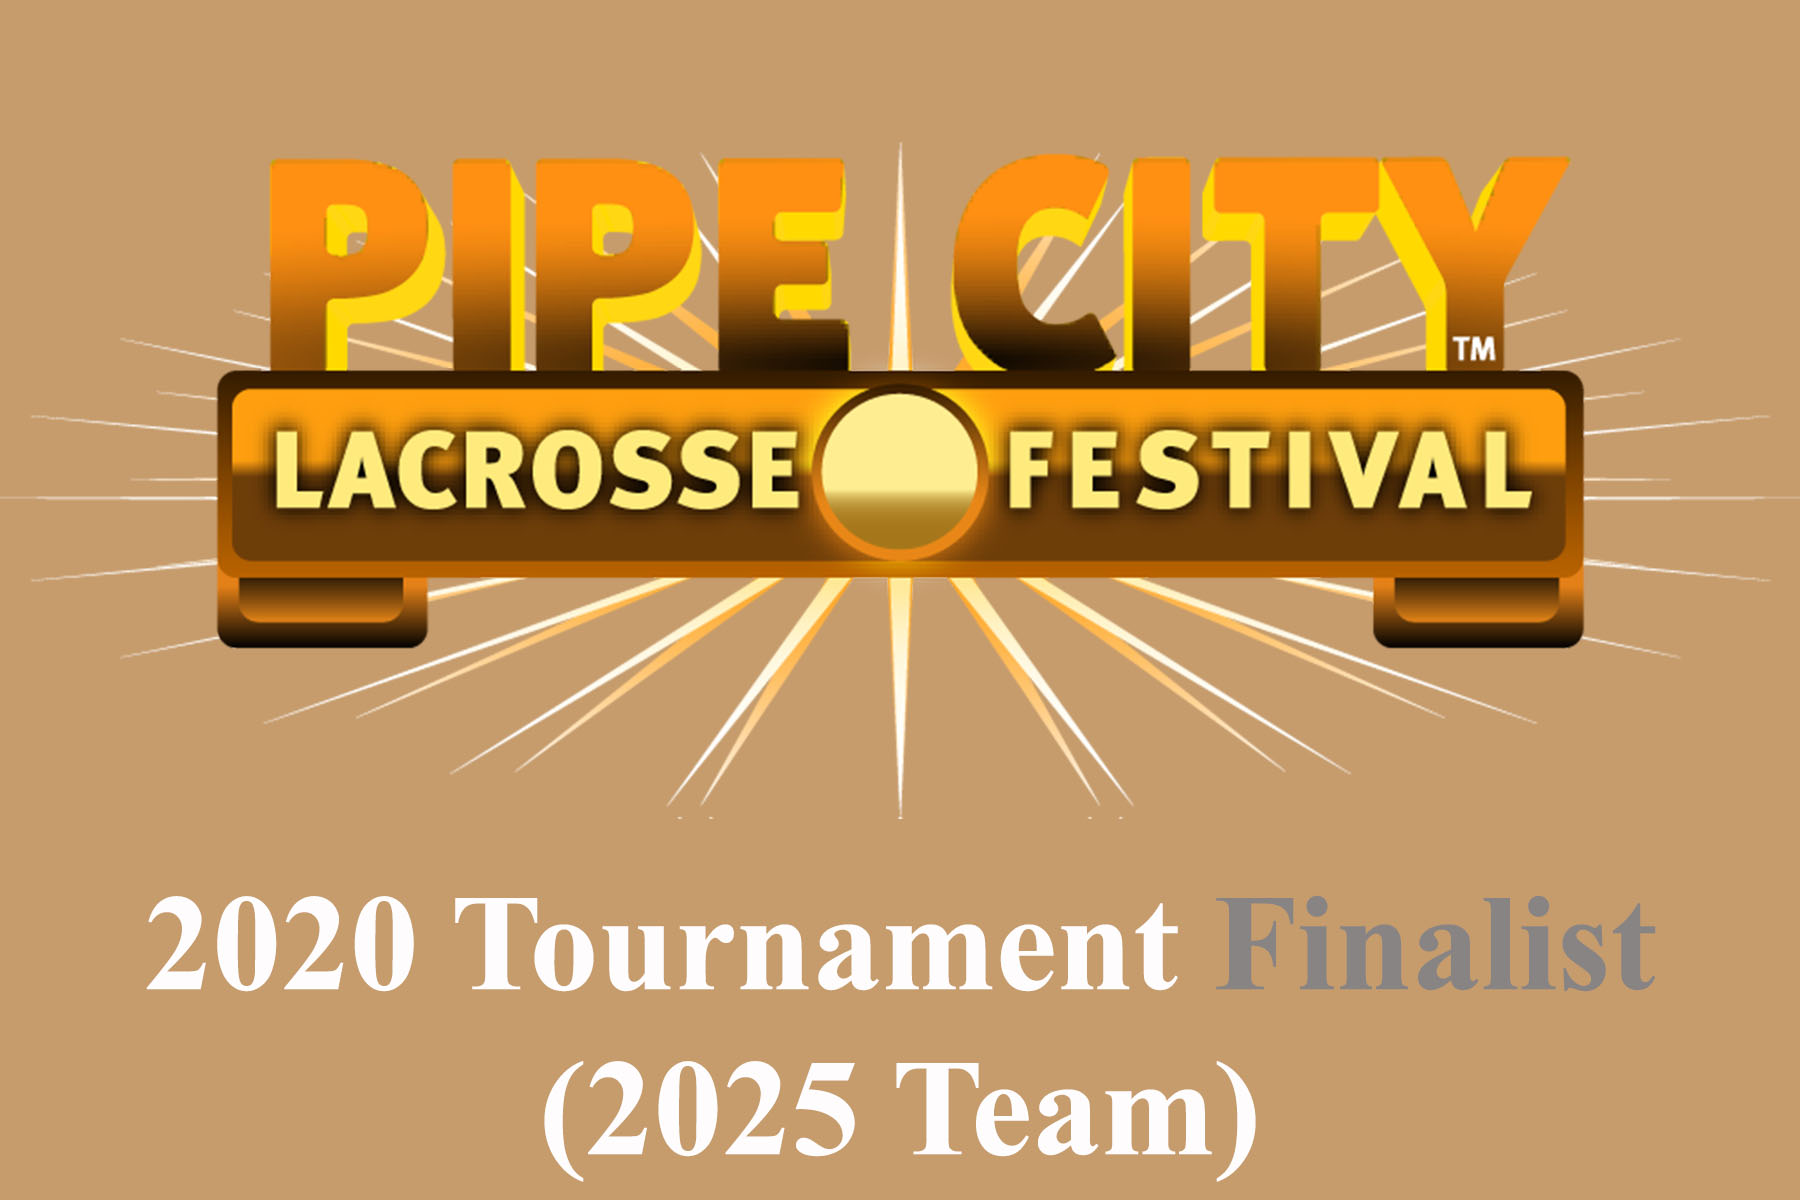 Pipe City Finalist 2025